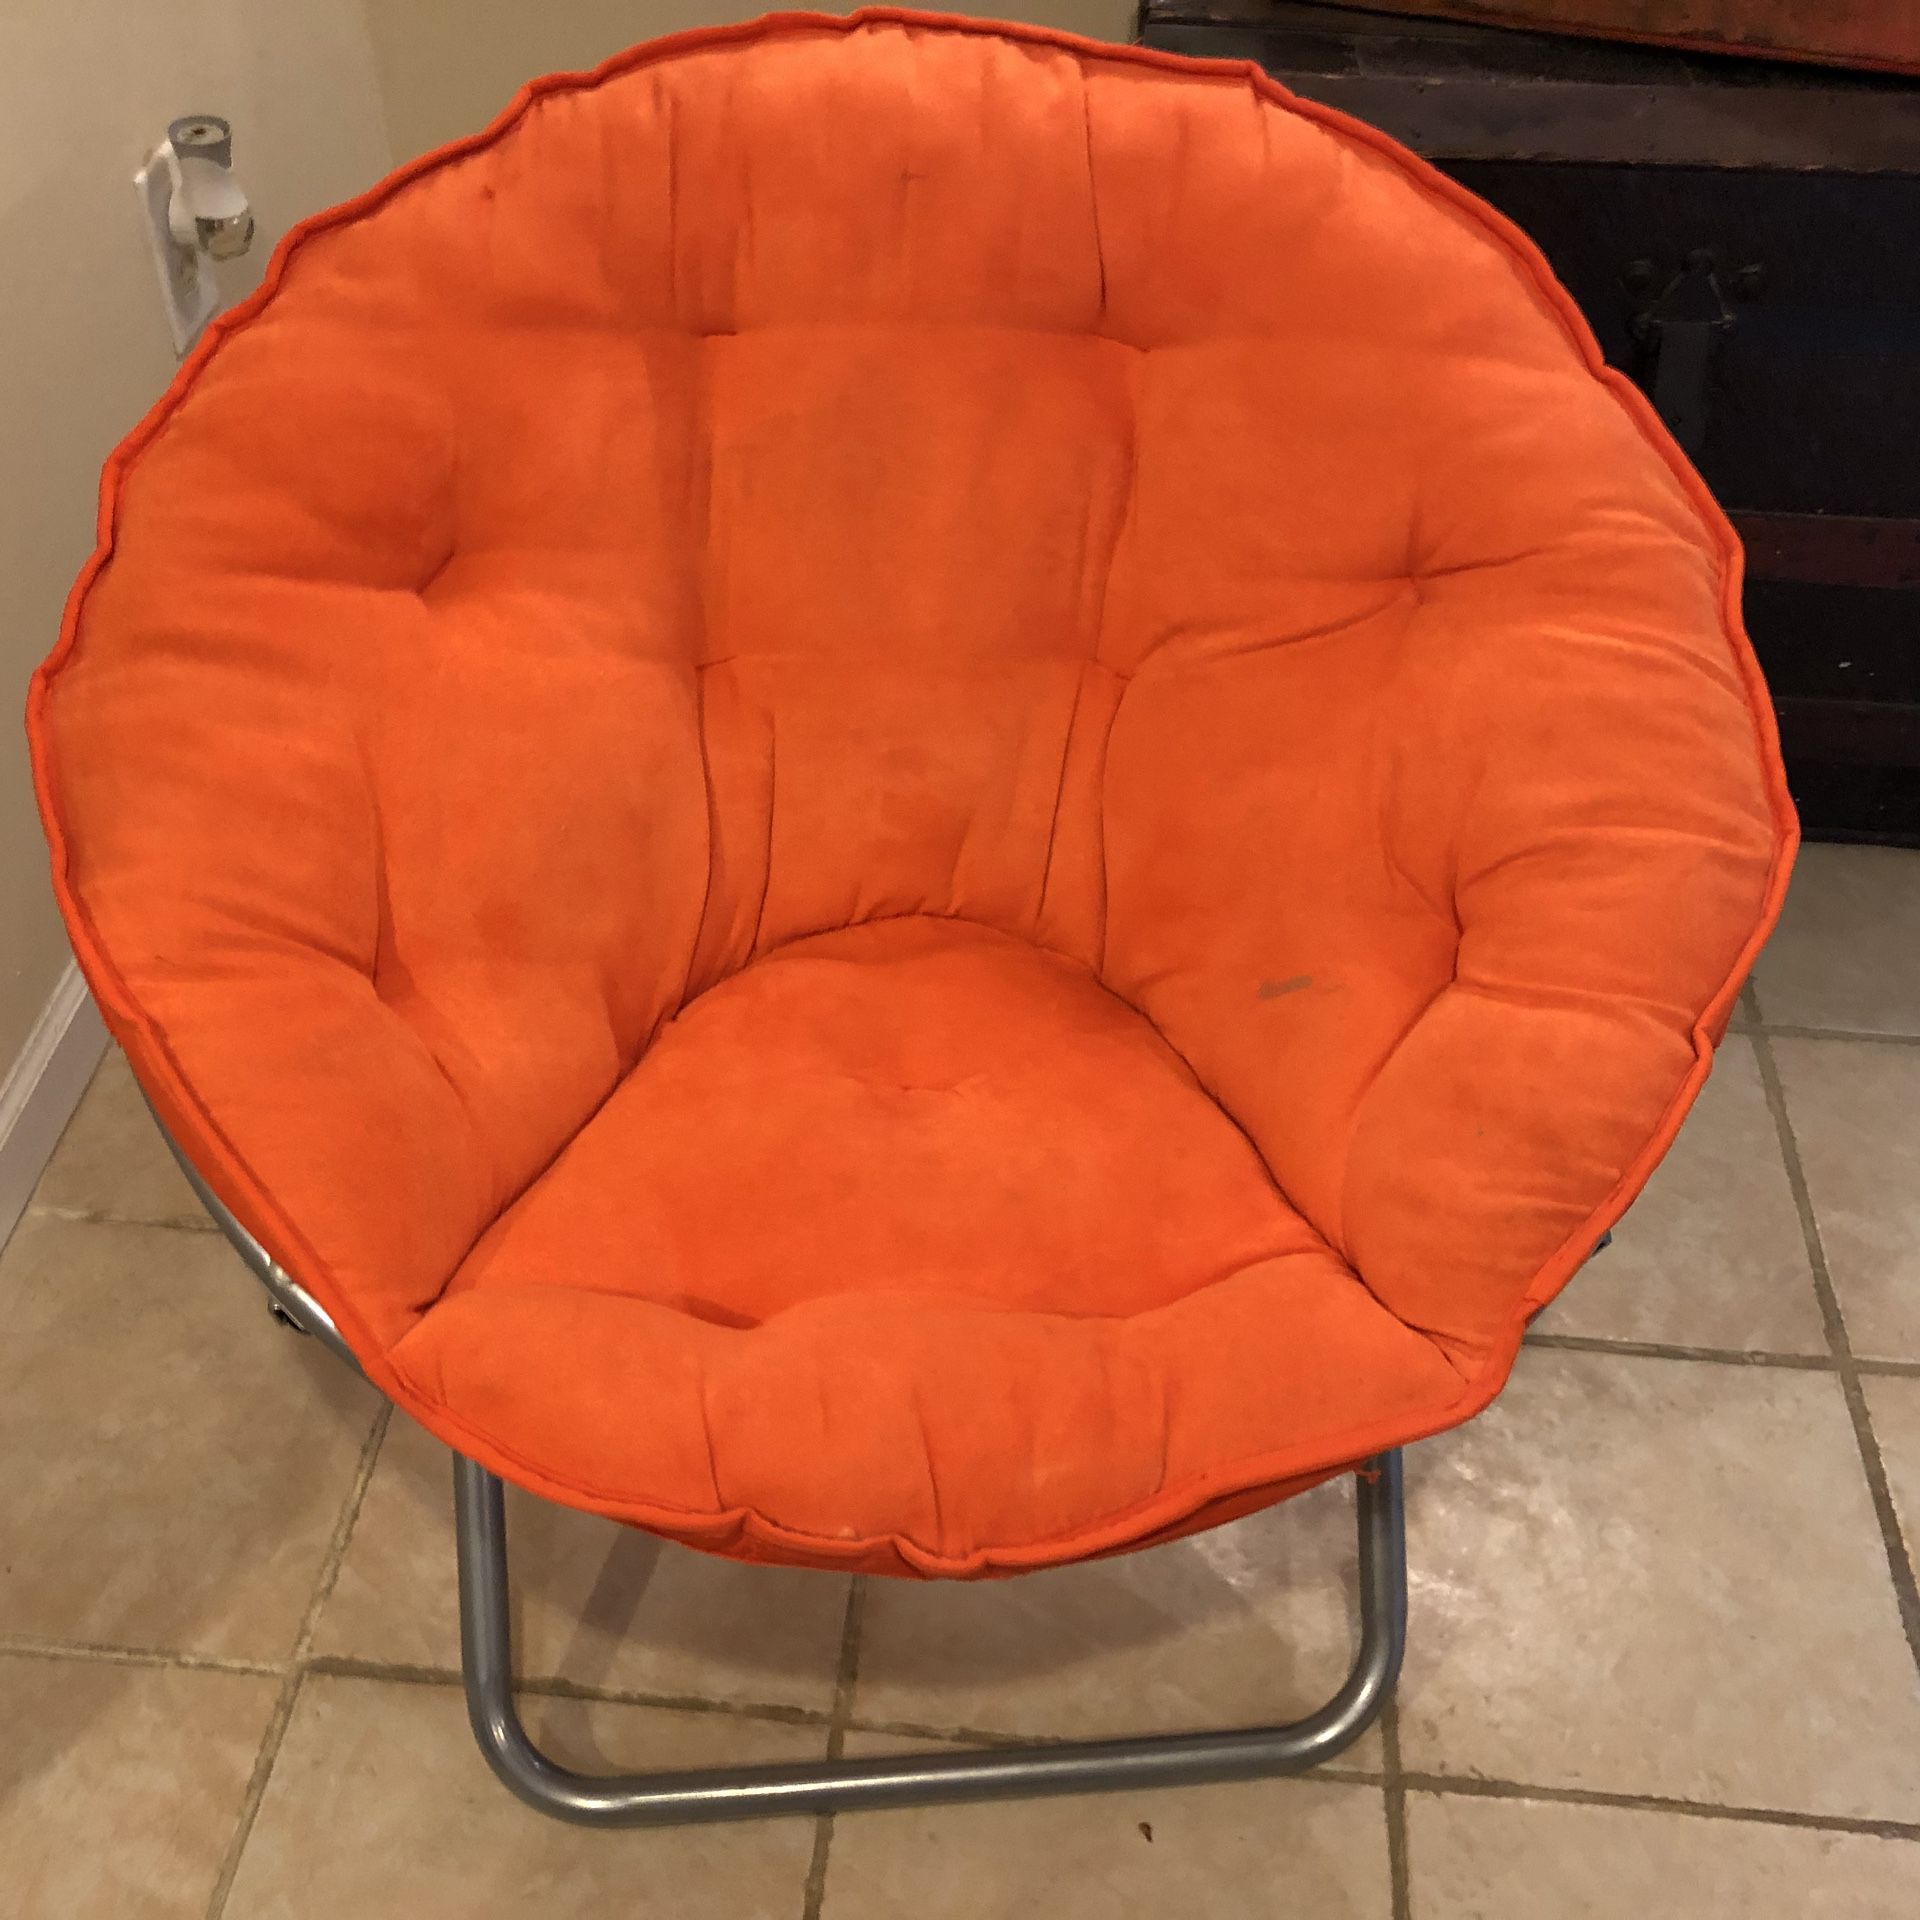 Orange adult size saucer chair